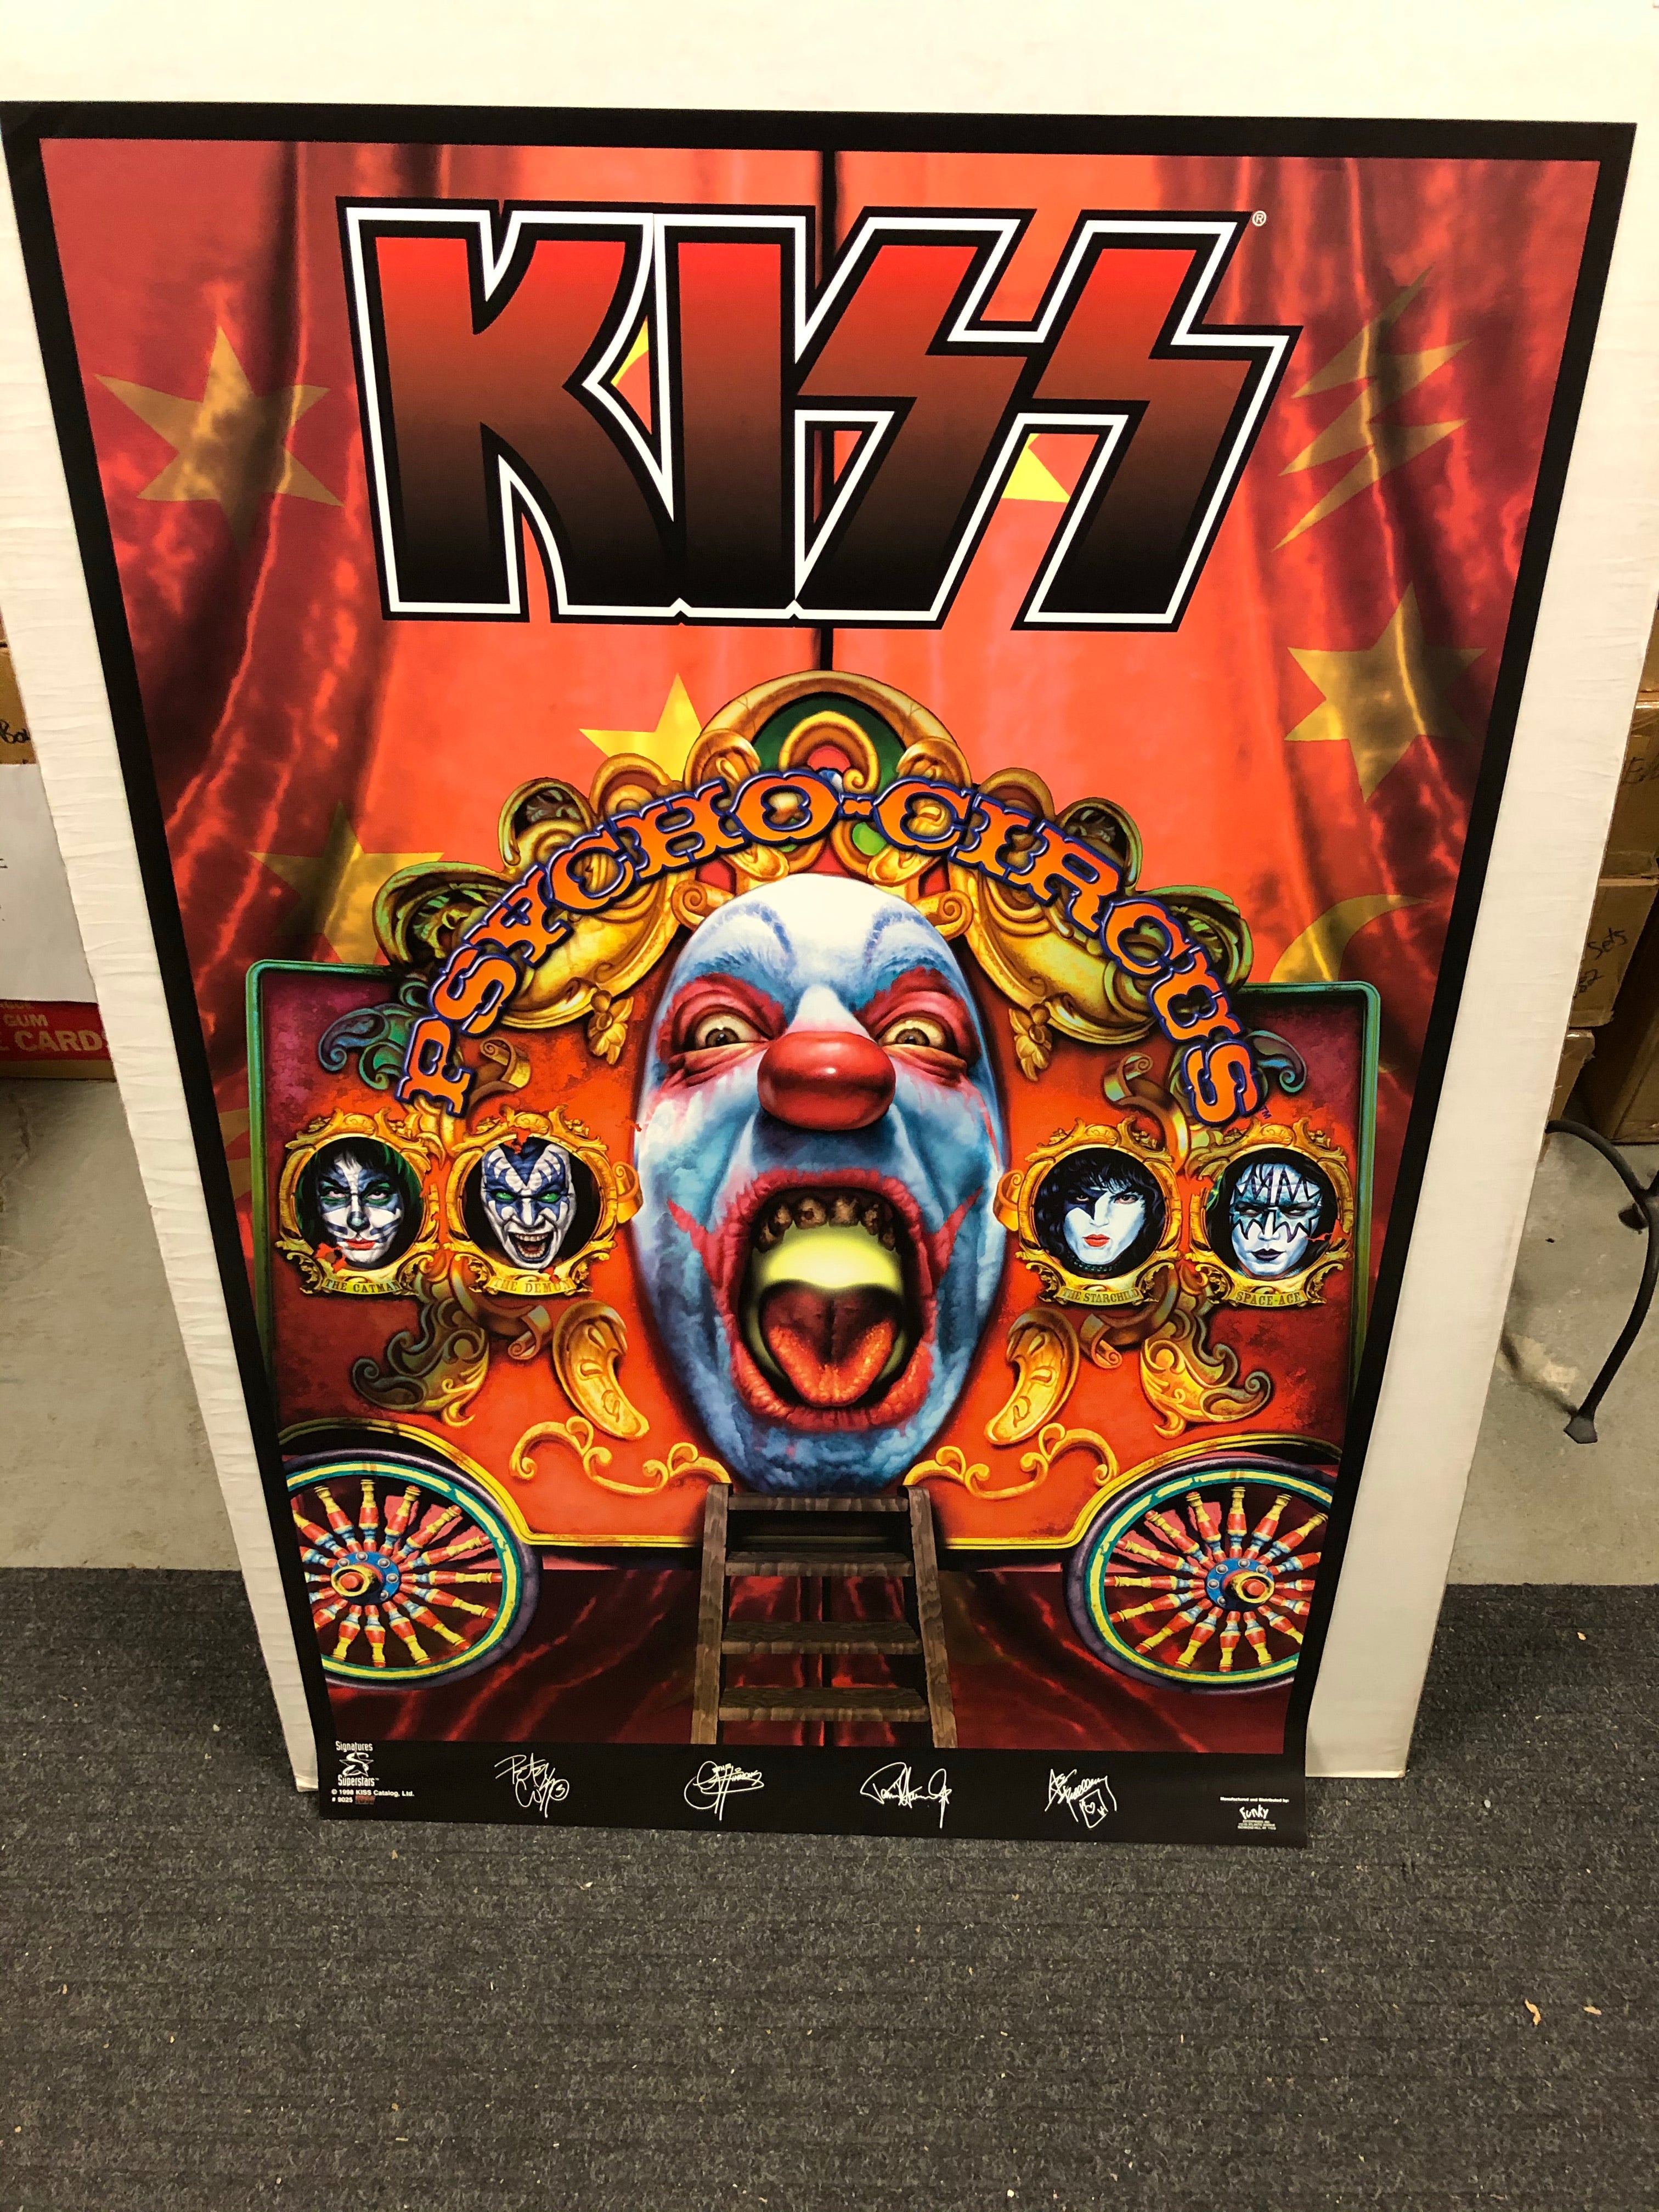 Original vintage Kiss concert poster from 1990s